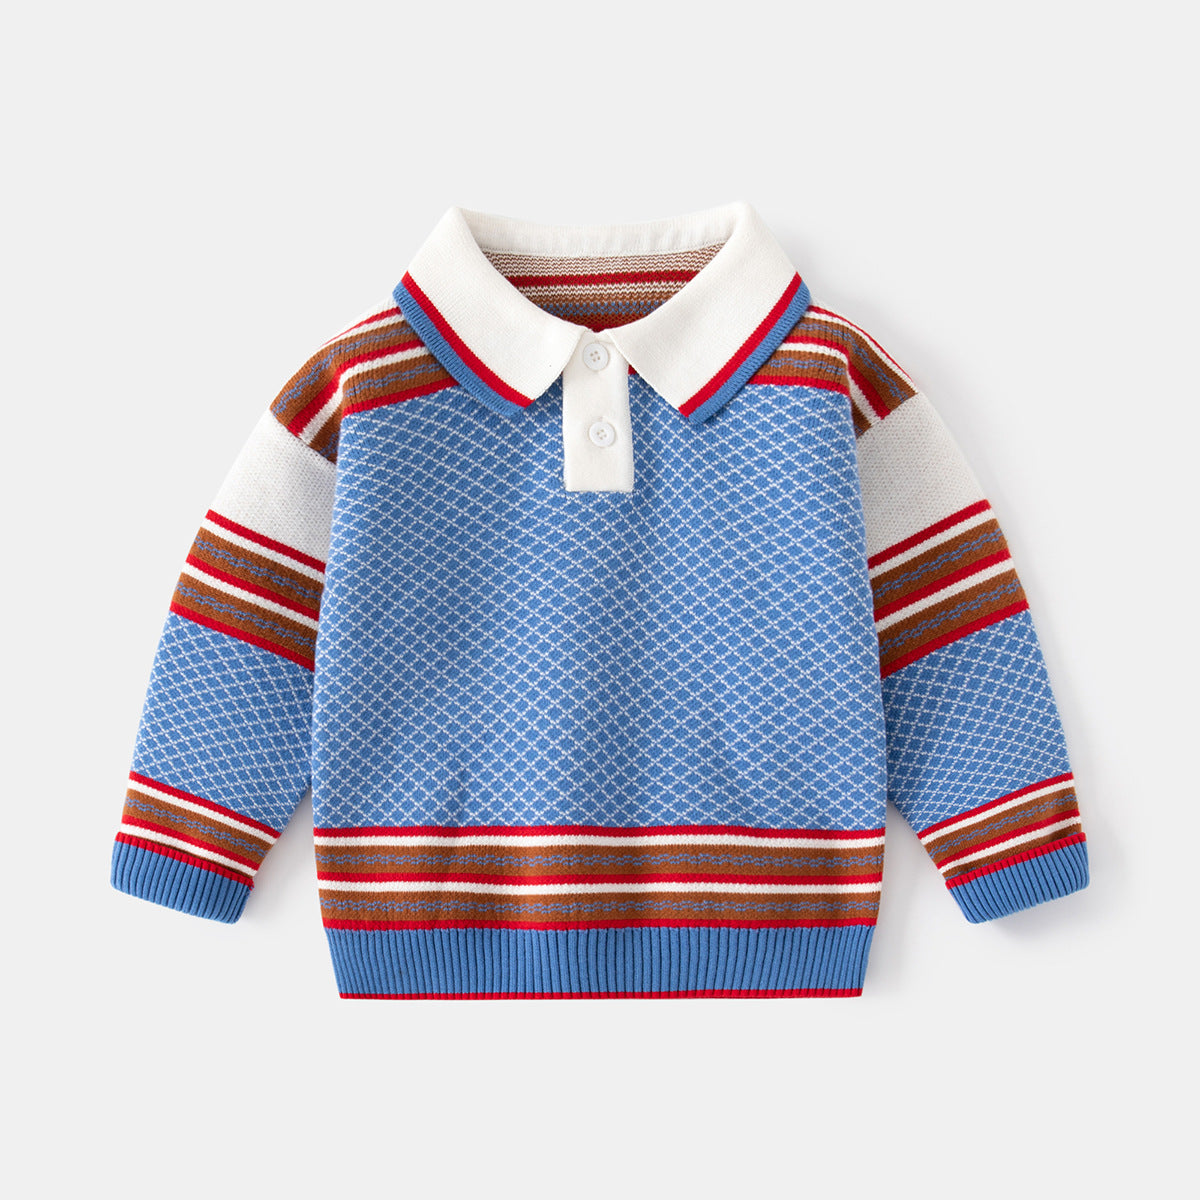 [513636] - Atasan Sweater Rajut Kerah Polo Import Anak Laki-Laki - Motif Striped Scales